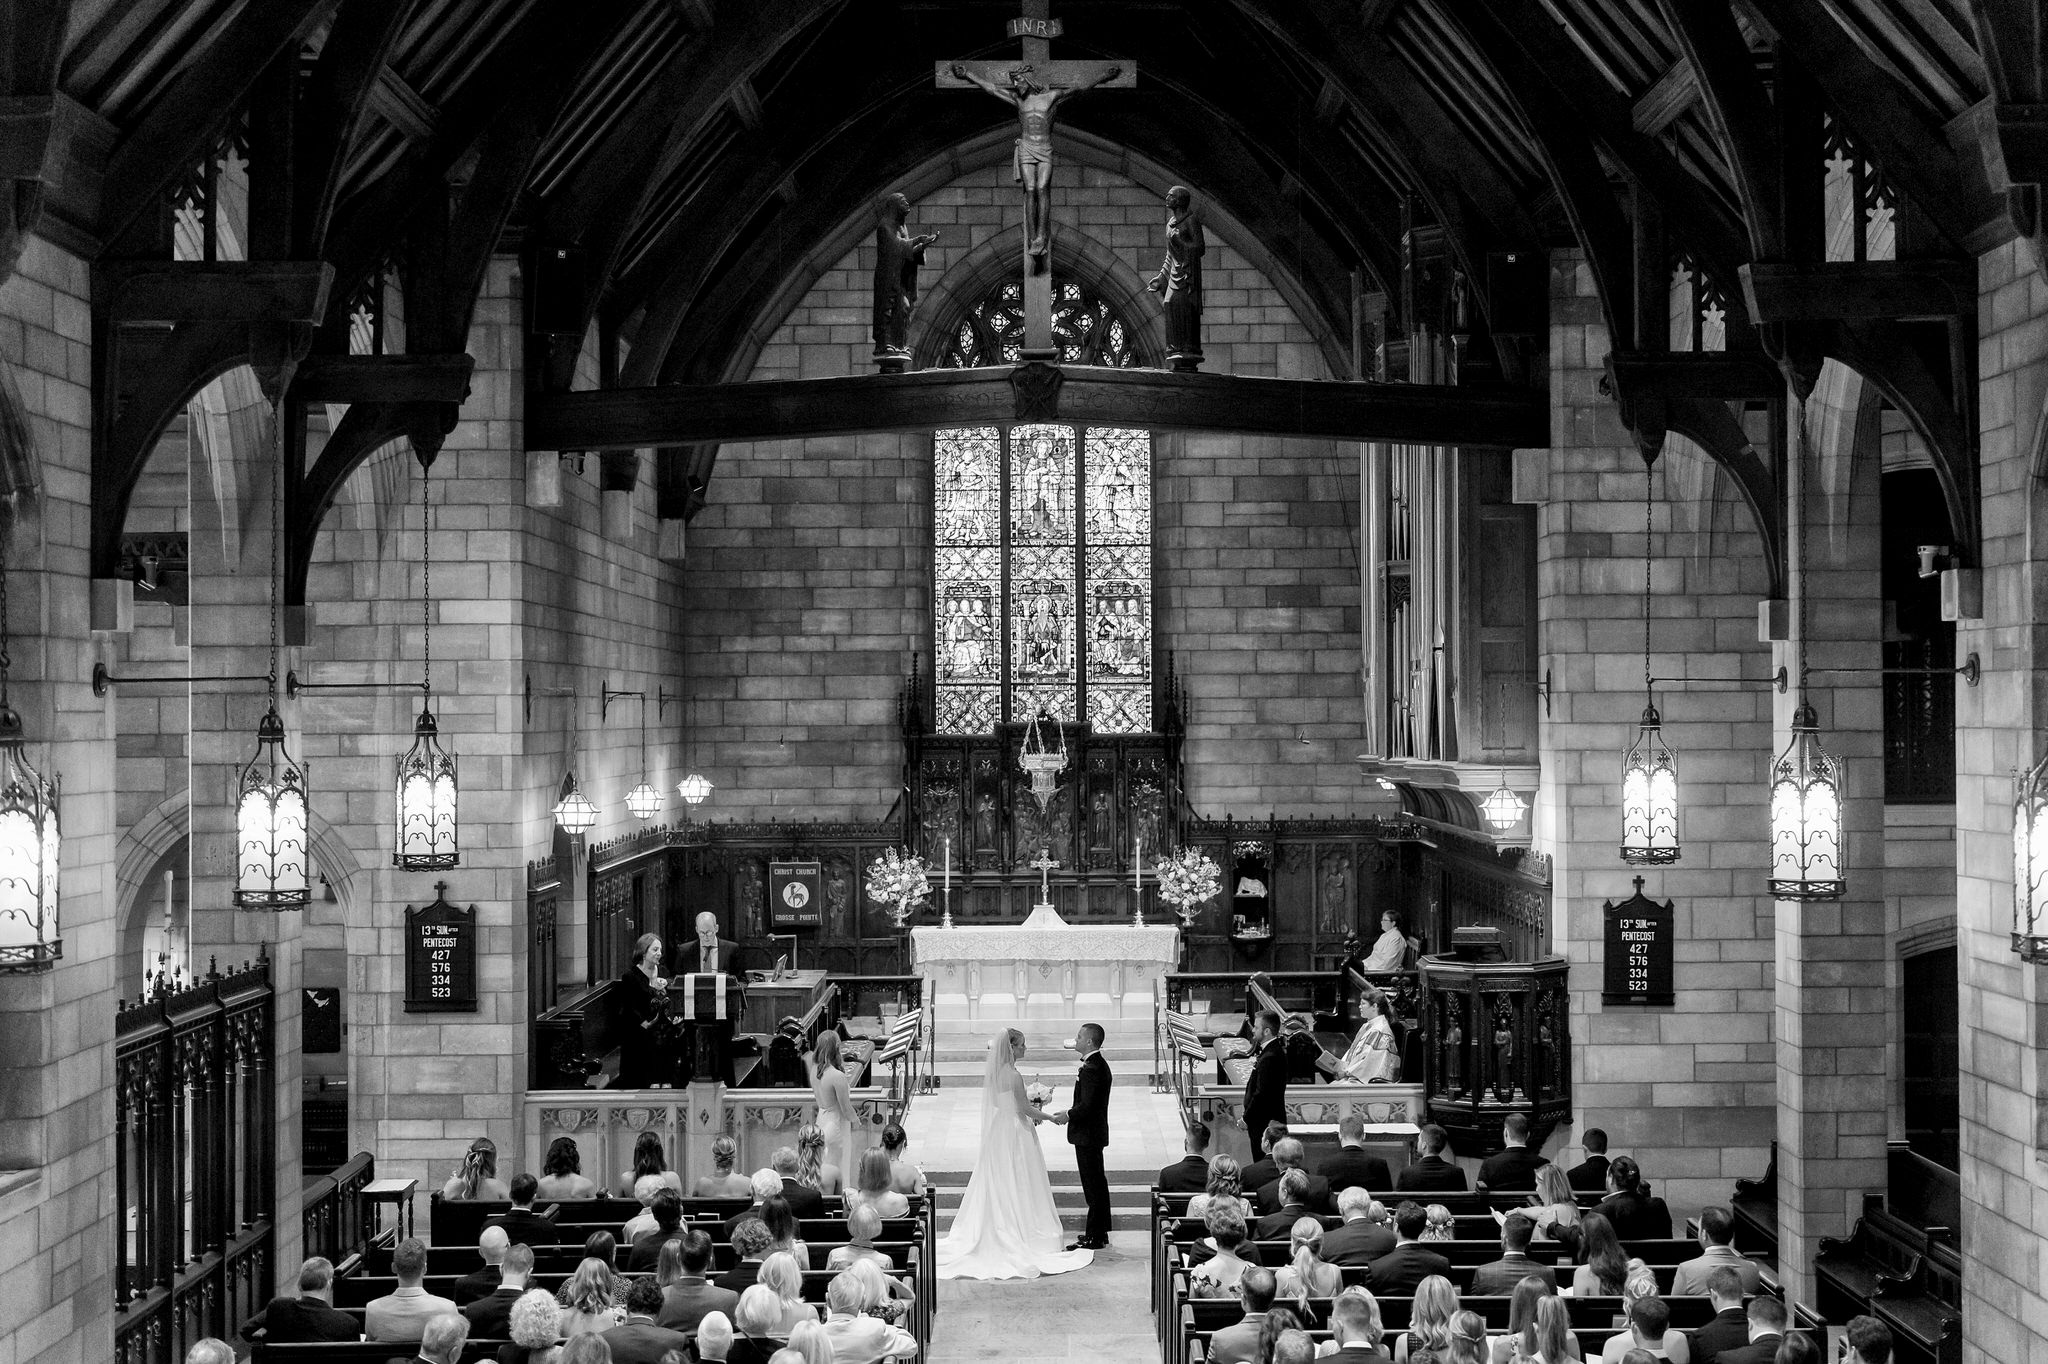 Christ Church Grosse Pointe wedding ceremony.  